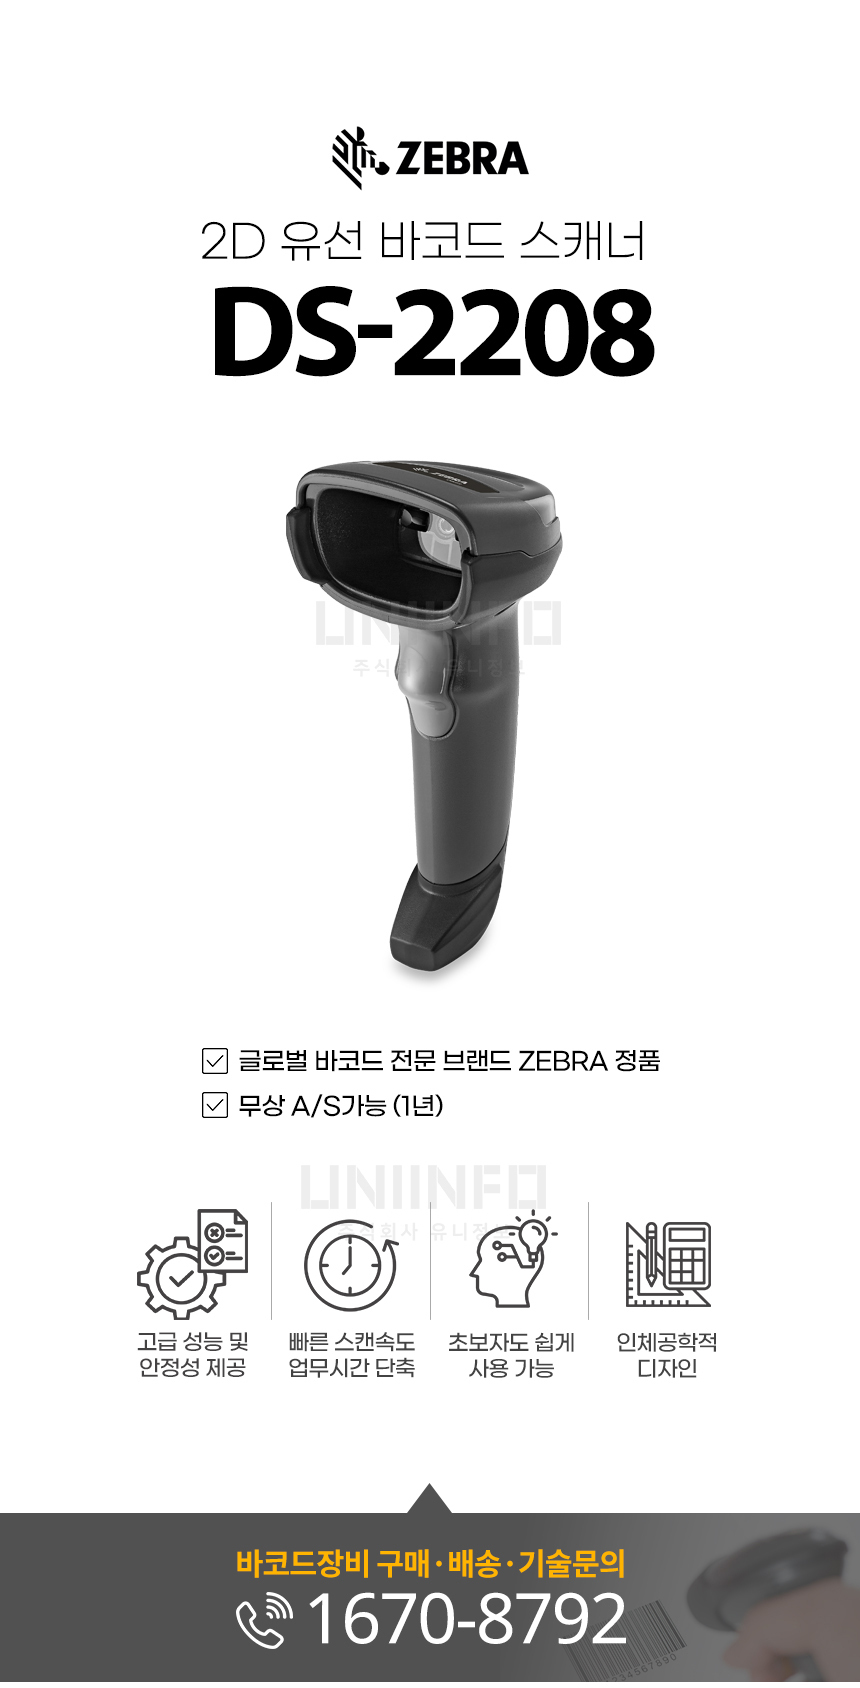 ZEBRA 2D 유선 바코드 스캐너 DS-2208 글로벌 바코드 전문 브랜드 ZEBRA 정품 무상 AS 가능 고성능 빠른 스캔 속도 인체공학적 디자인